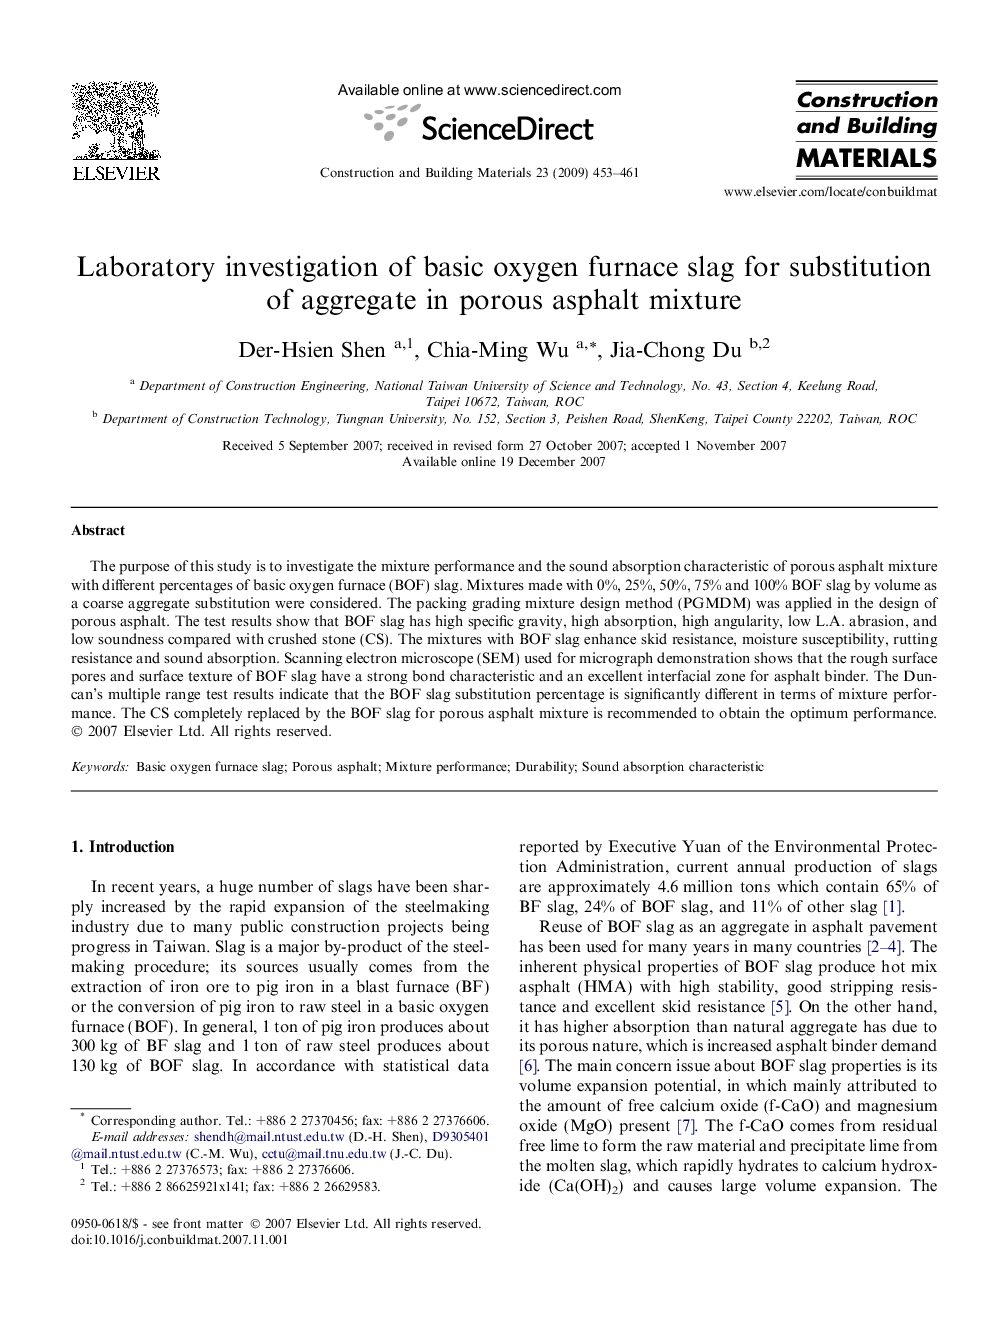 Laboratory investigation of basic oxygen furnace slag for substitution of aggregate in porous asphalt mixture